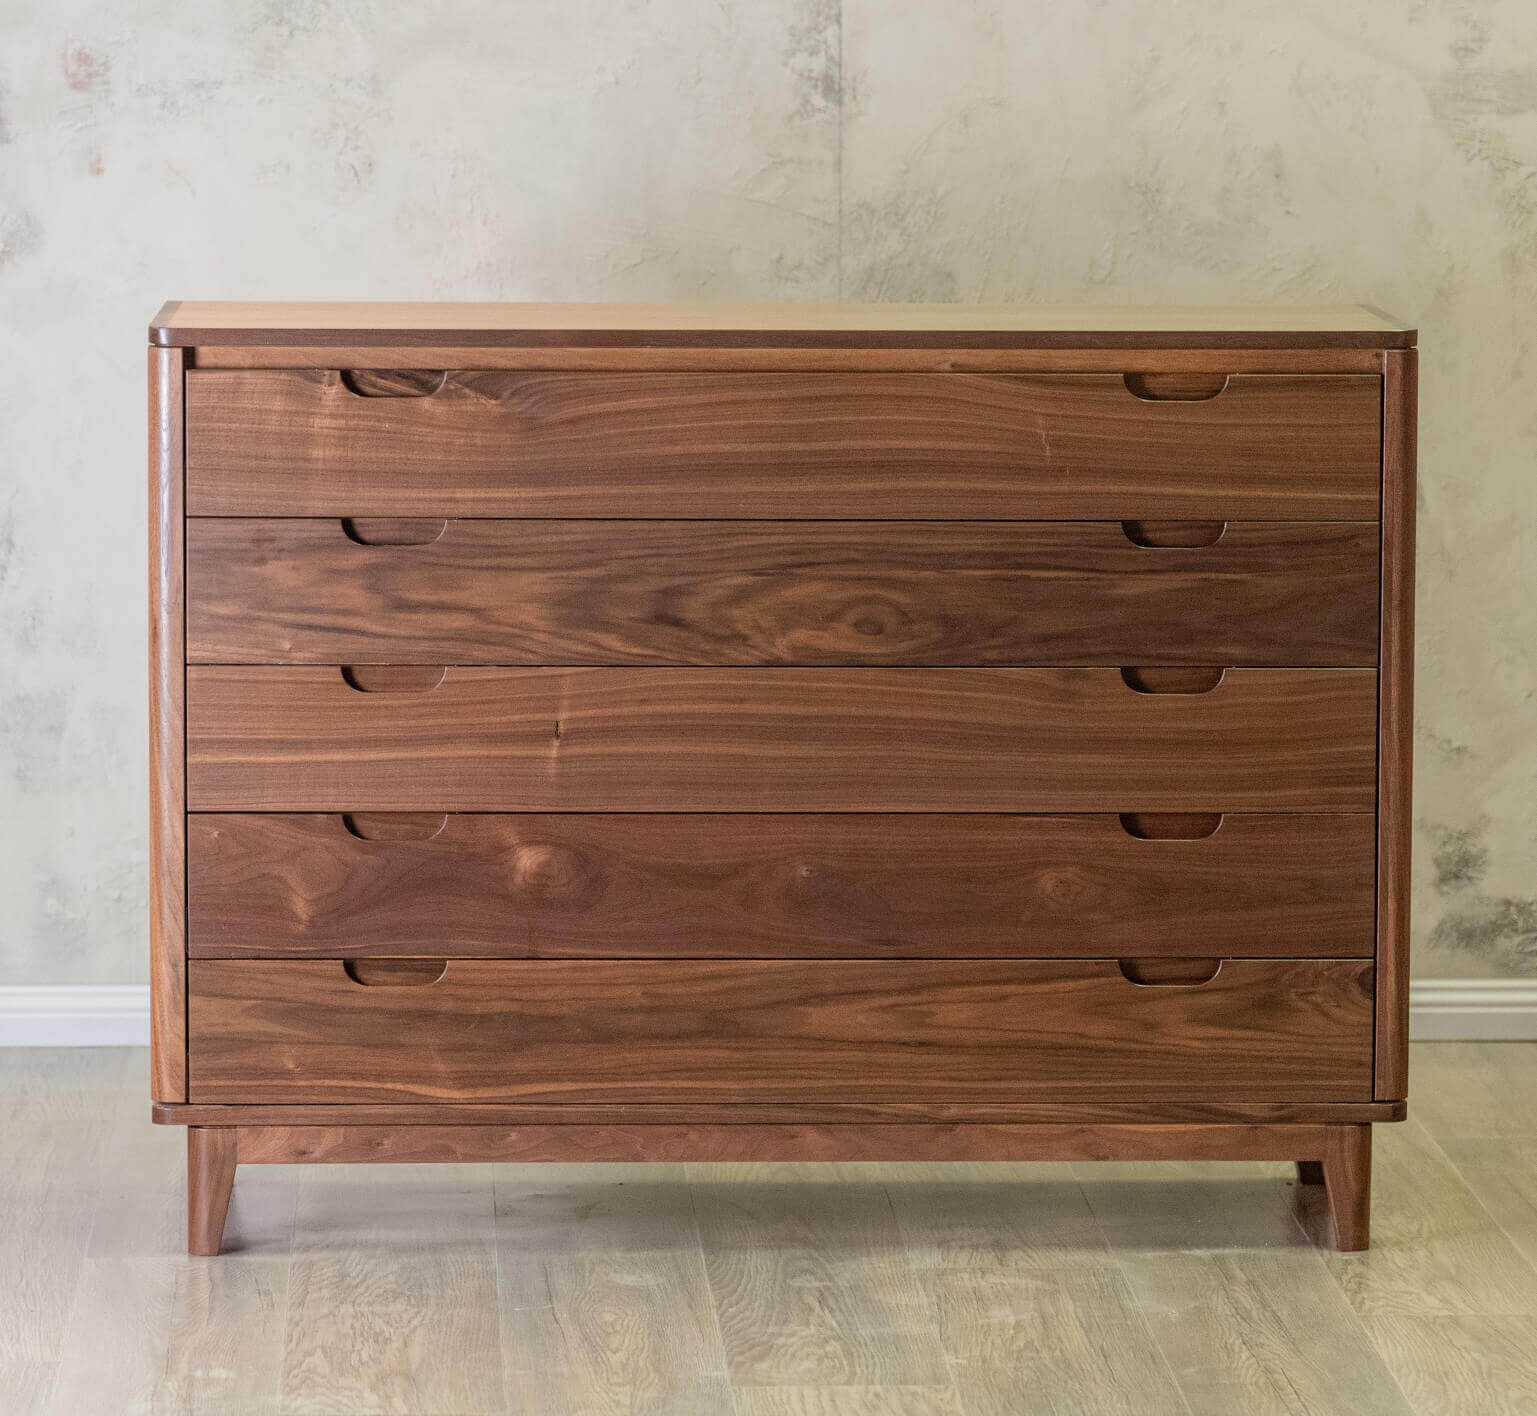 Handmade custom chest of drawers in walnut